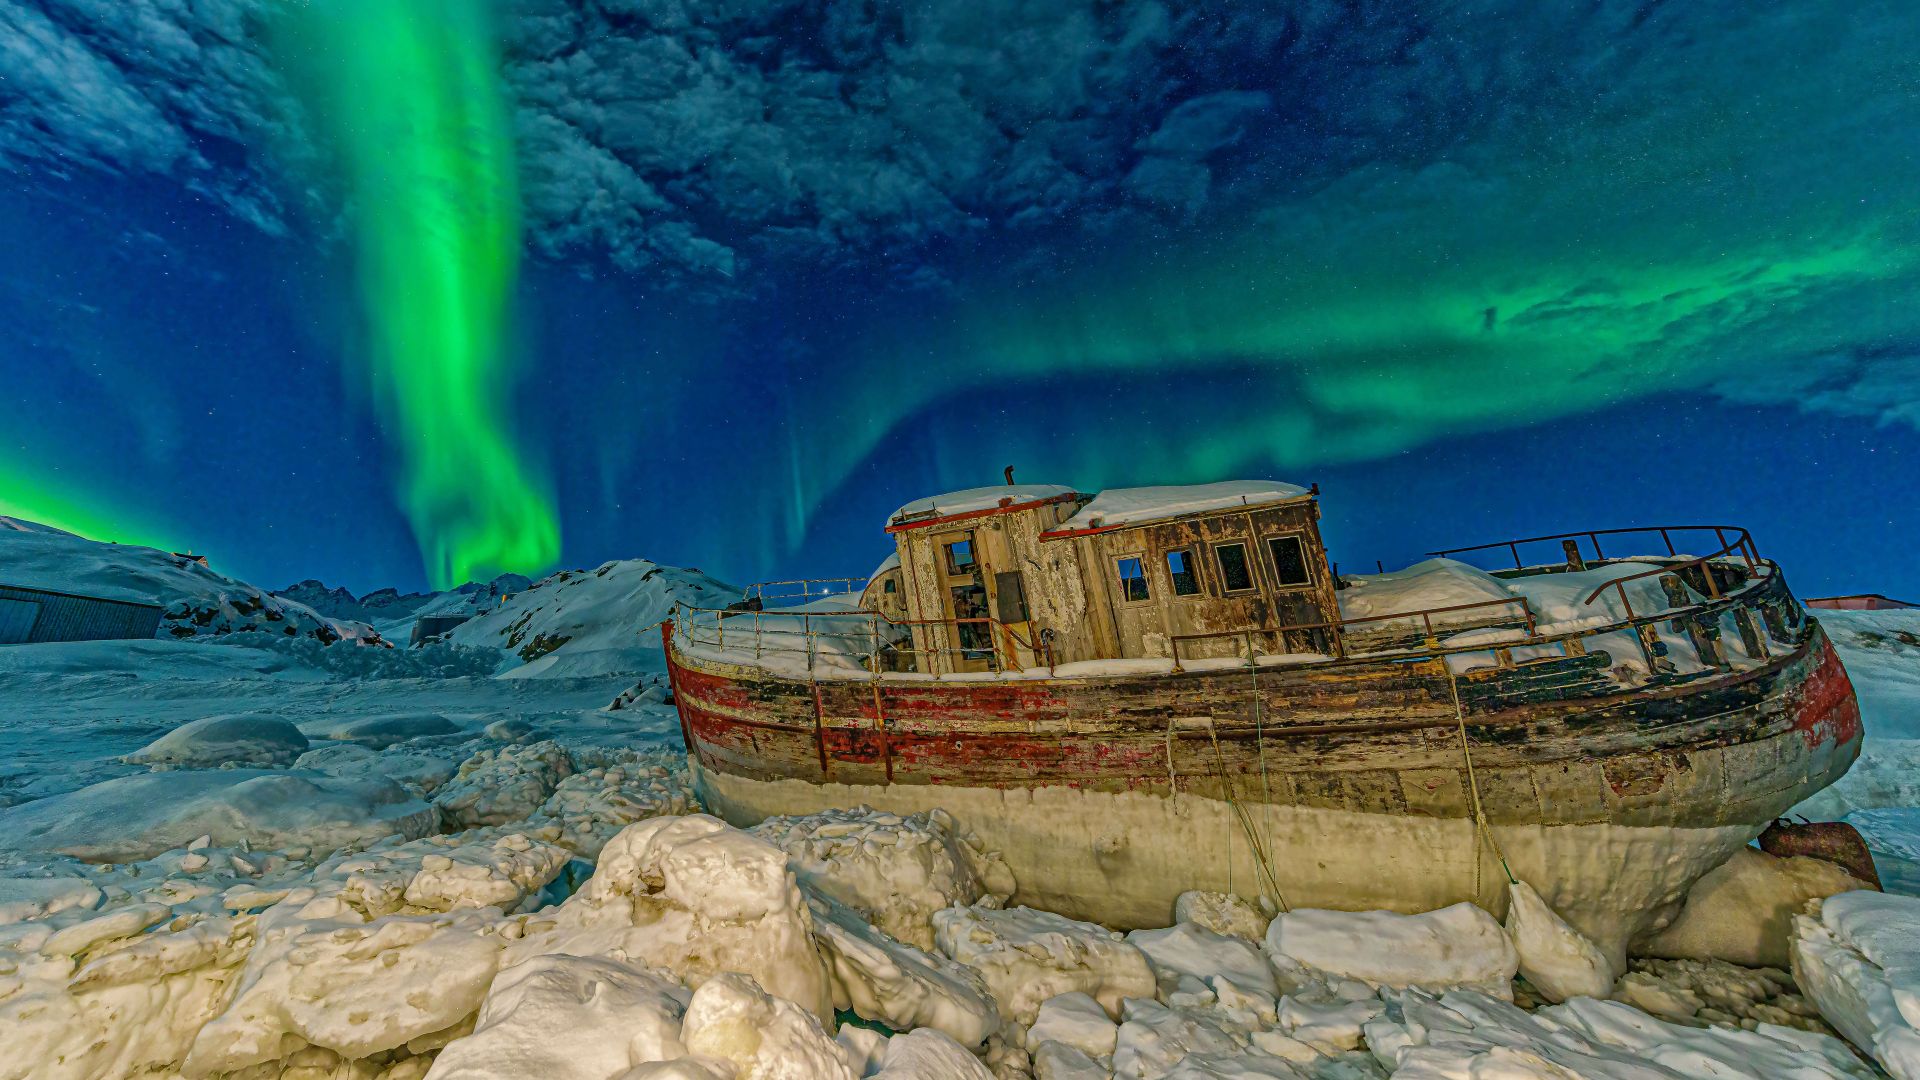 Norway, Europe, aurora, ship, ice, winter, 5K (horizontal)